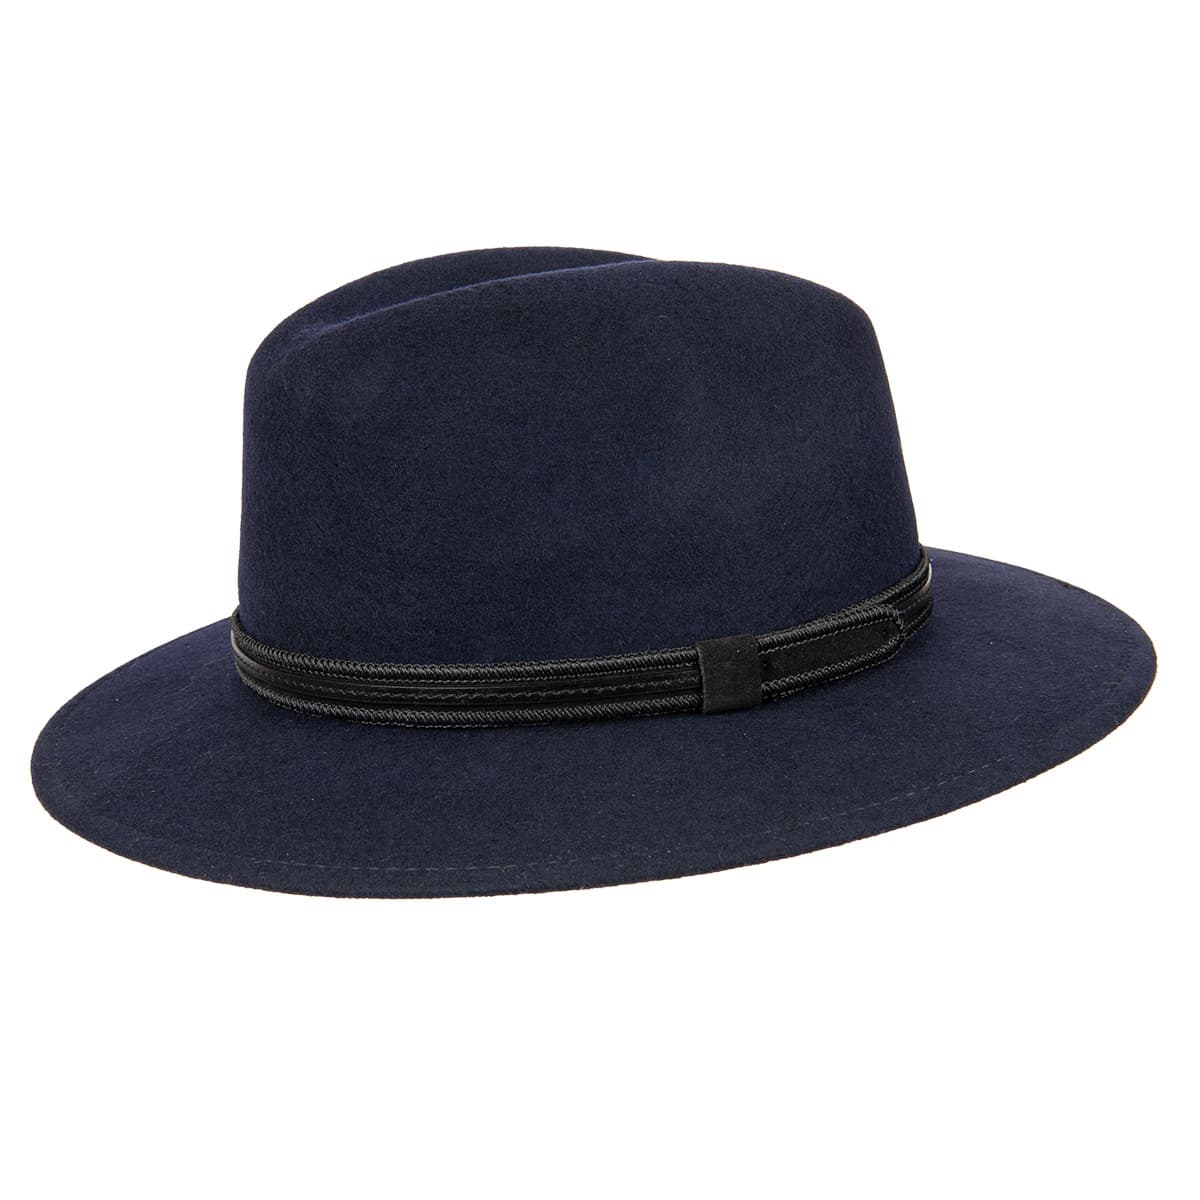 Fedora | The Web | Indigo Blue Wide Brim Hat Men | Fedora Hat for Men | Mens Fur Felt Hat